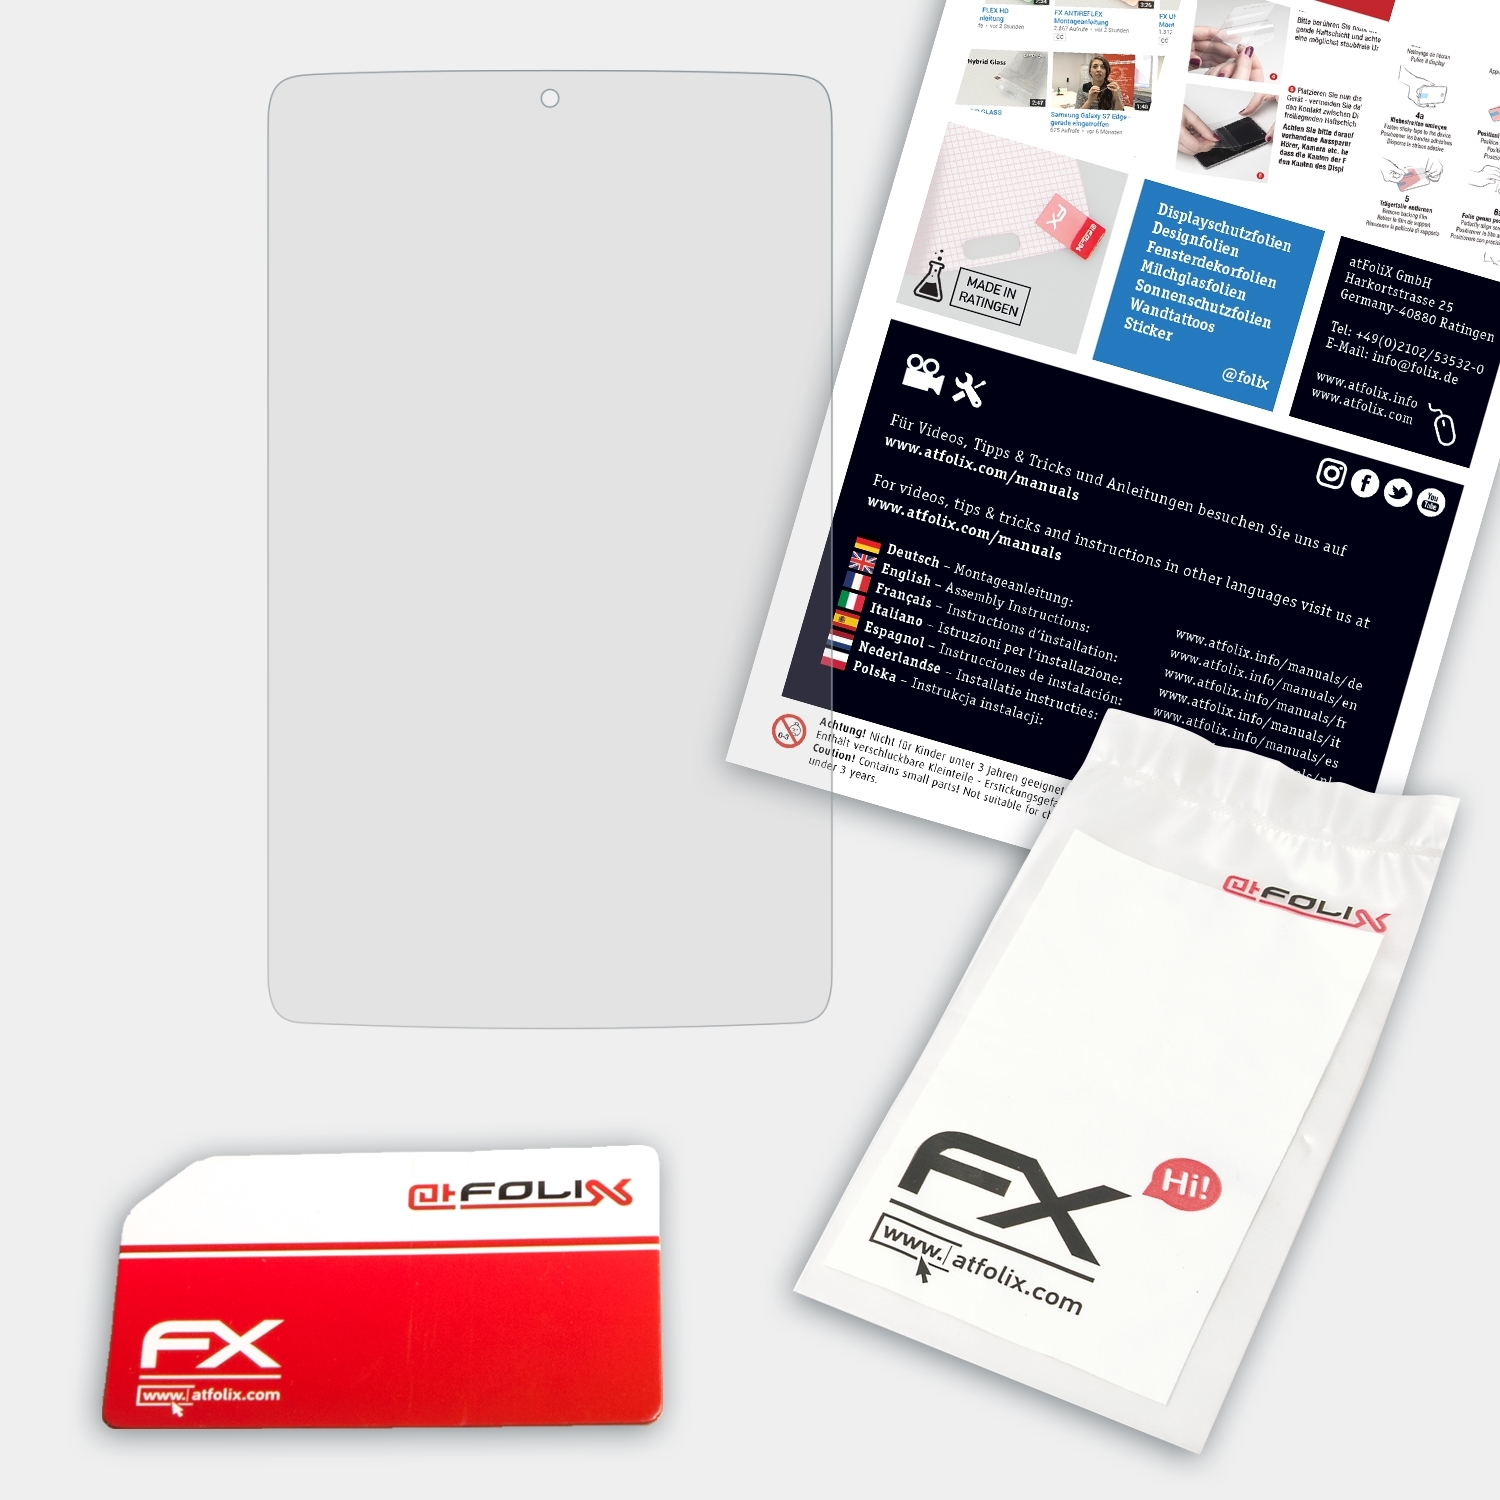 ATFOLIX FX-Hybrid-Glass Tablet) Alcatel A30 Schutzglas(für